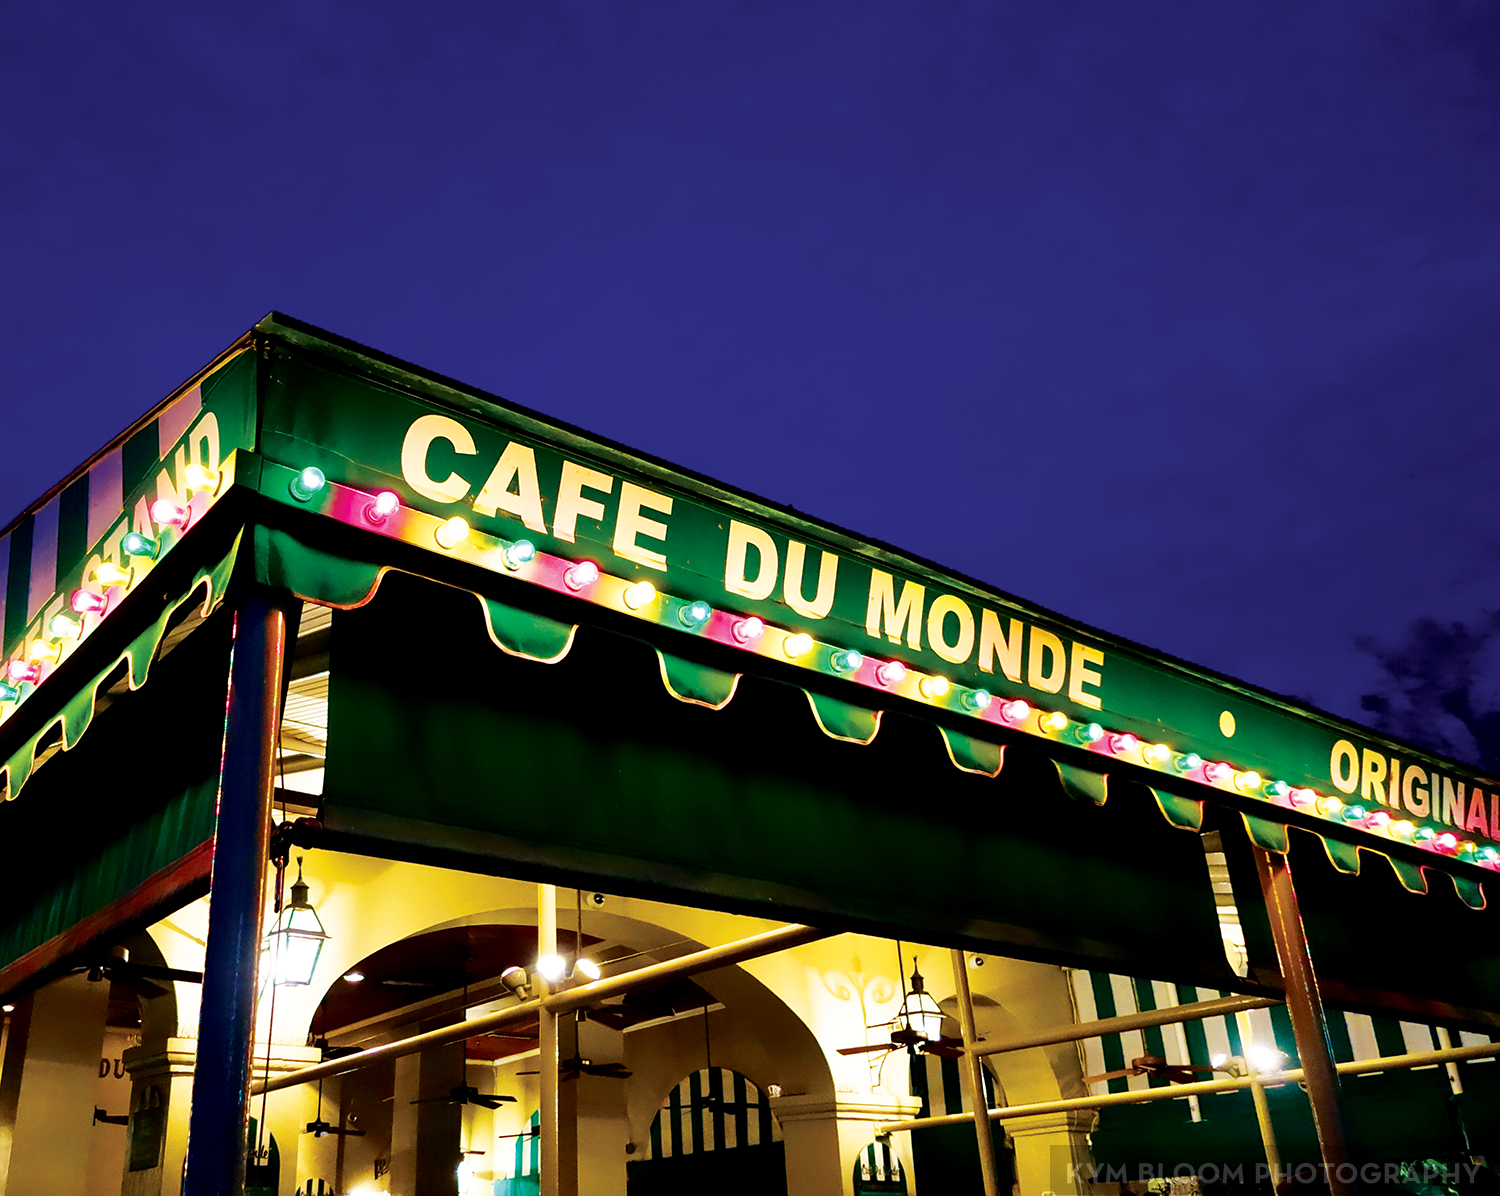 Cafe Du Jitters, photo by Kym Bloom